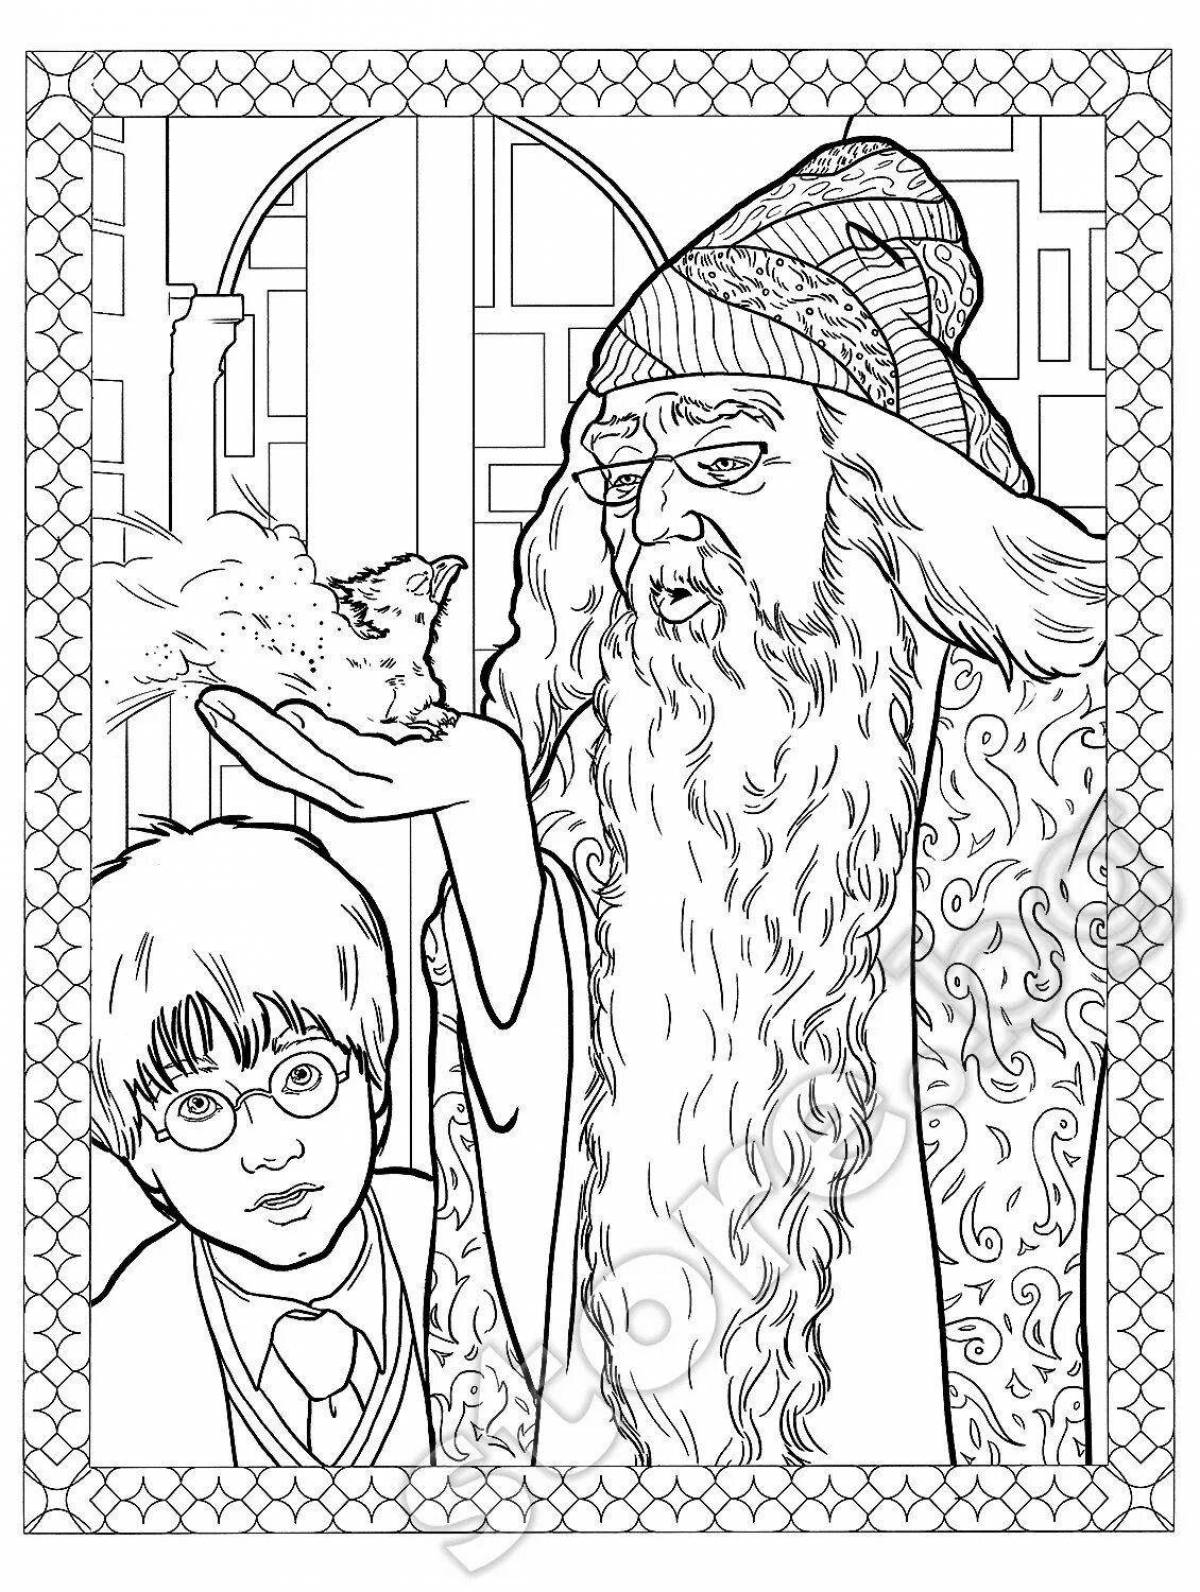 Dumbledore's charming coloring book